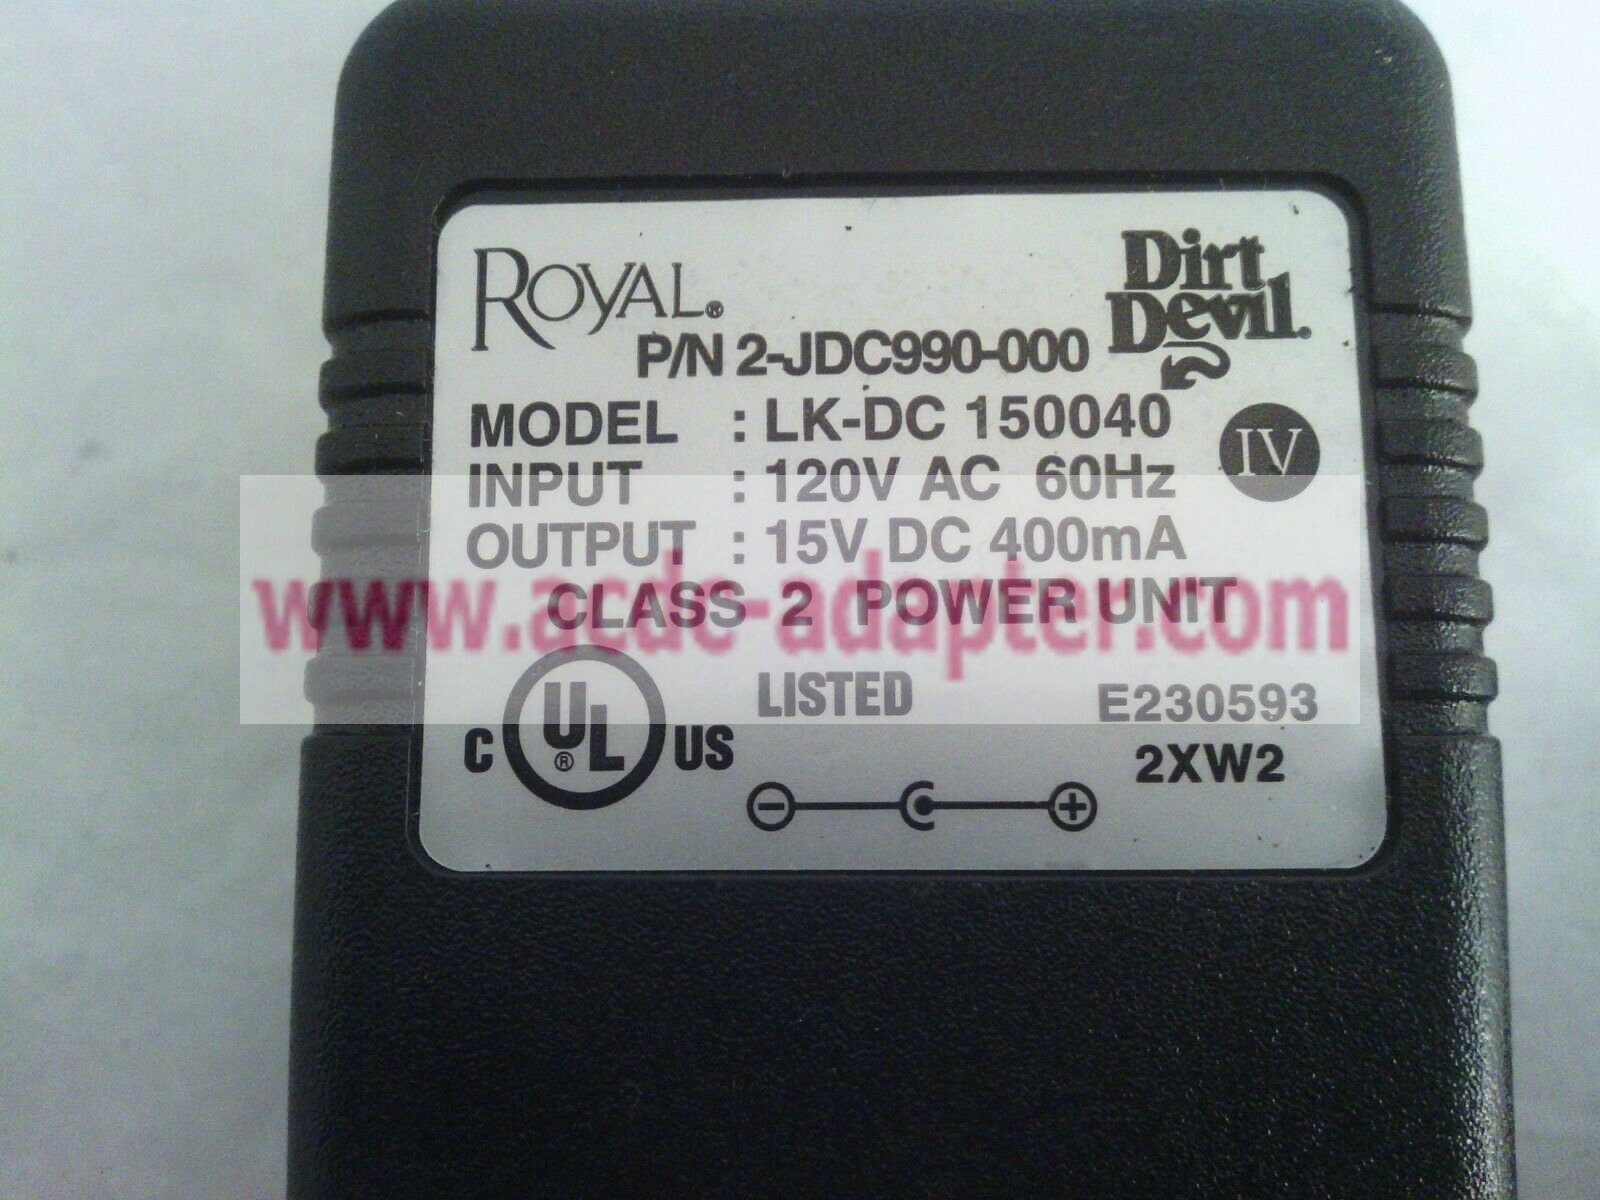 New Royal Dirt Devil LK-DC 150040 2-JDC990-000 15V 400mA AC/DC Adapter Charger